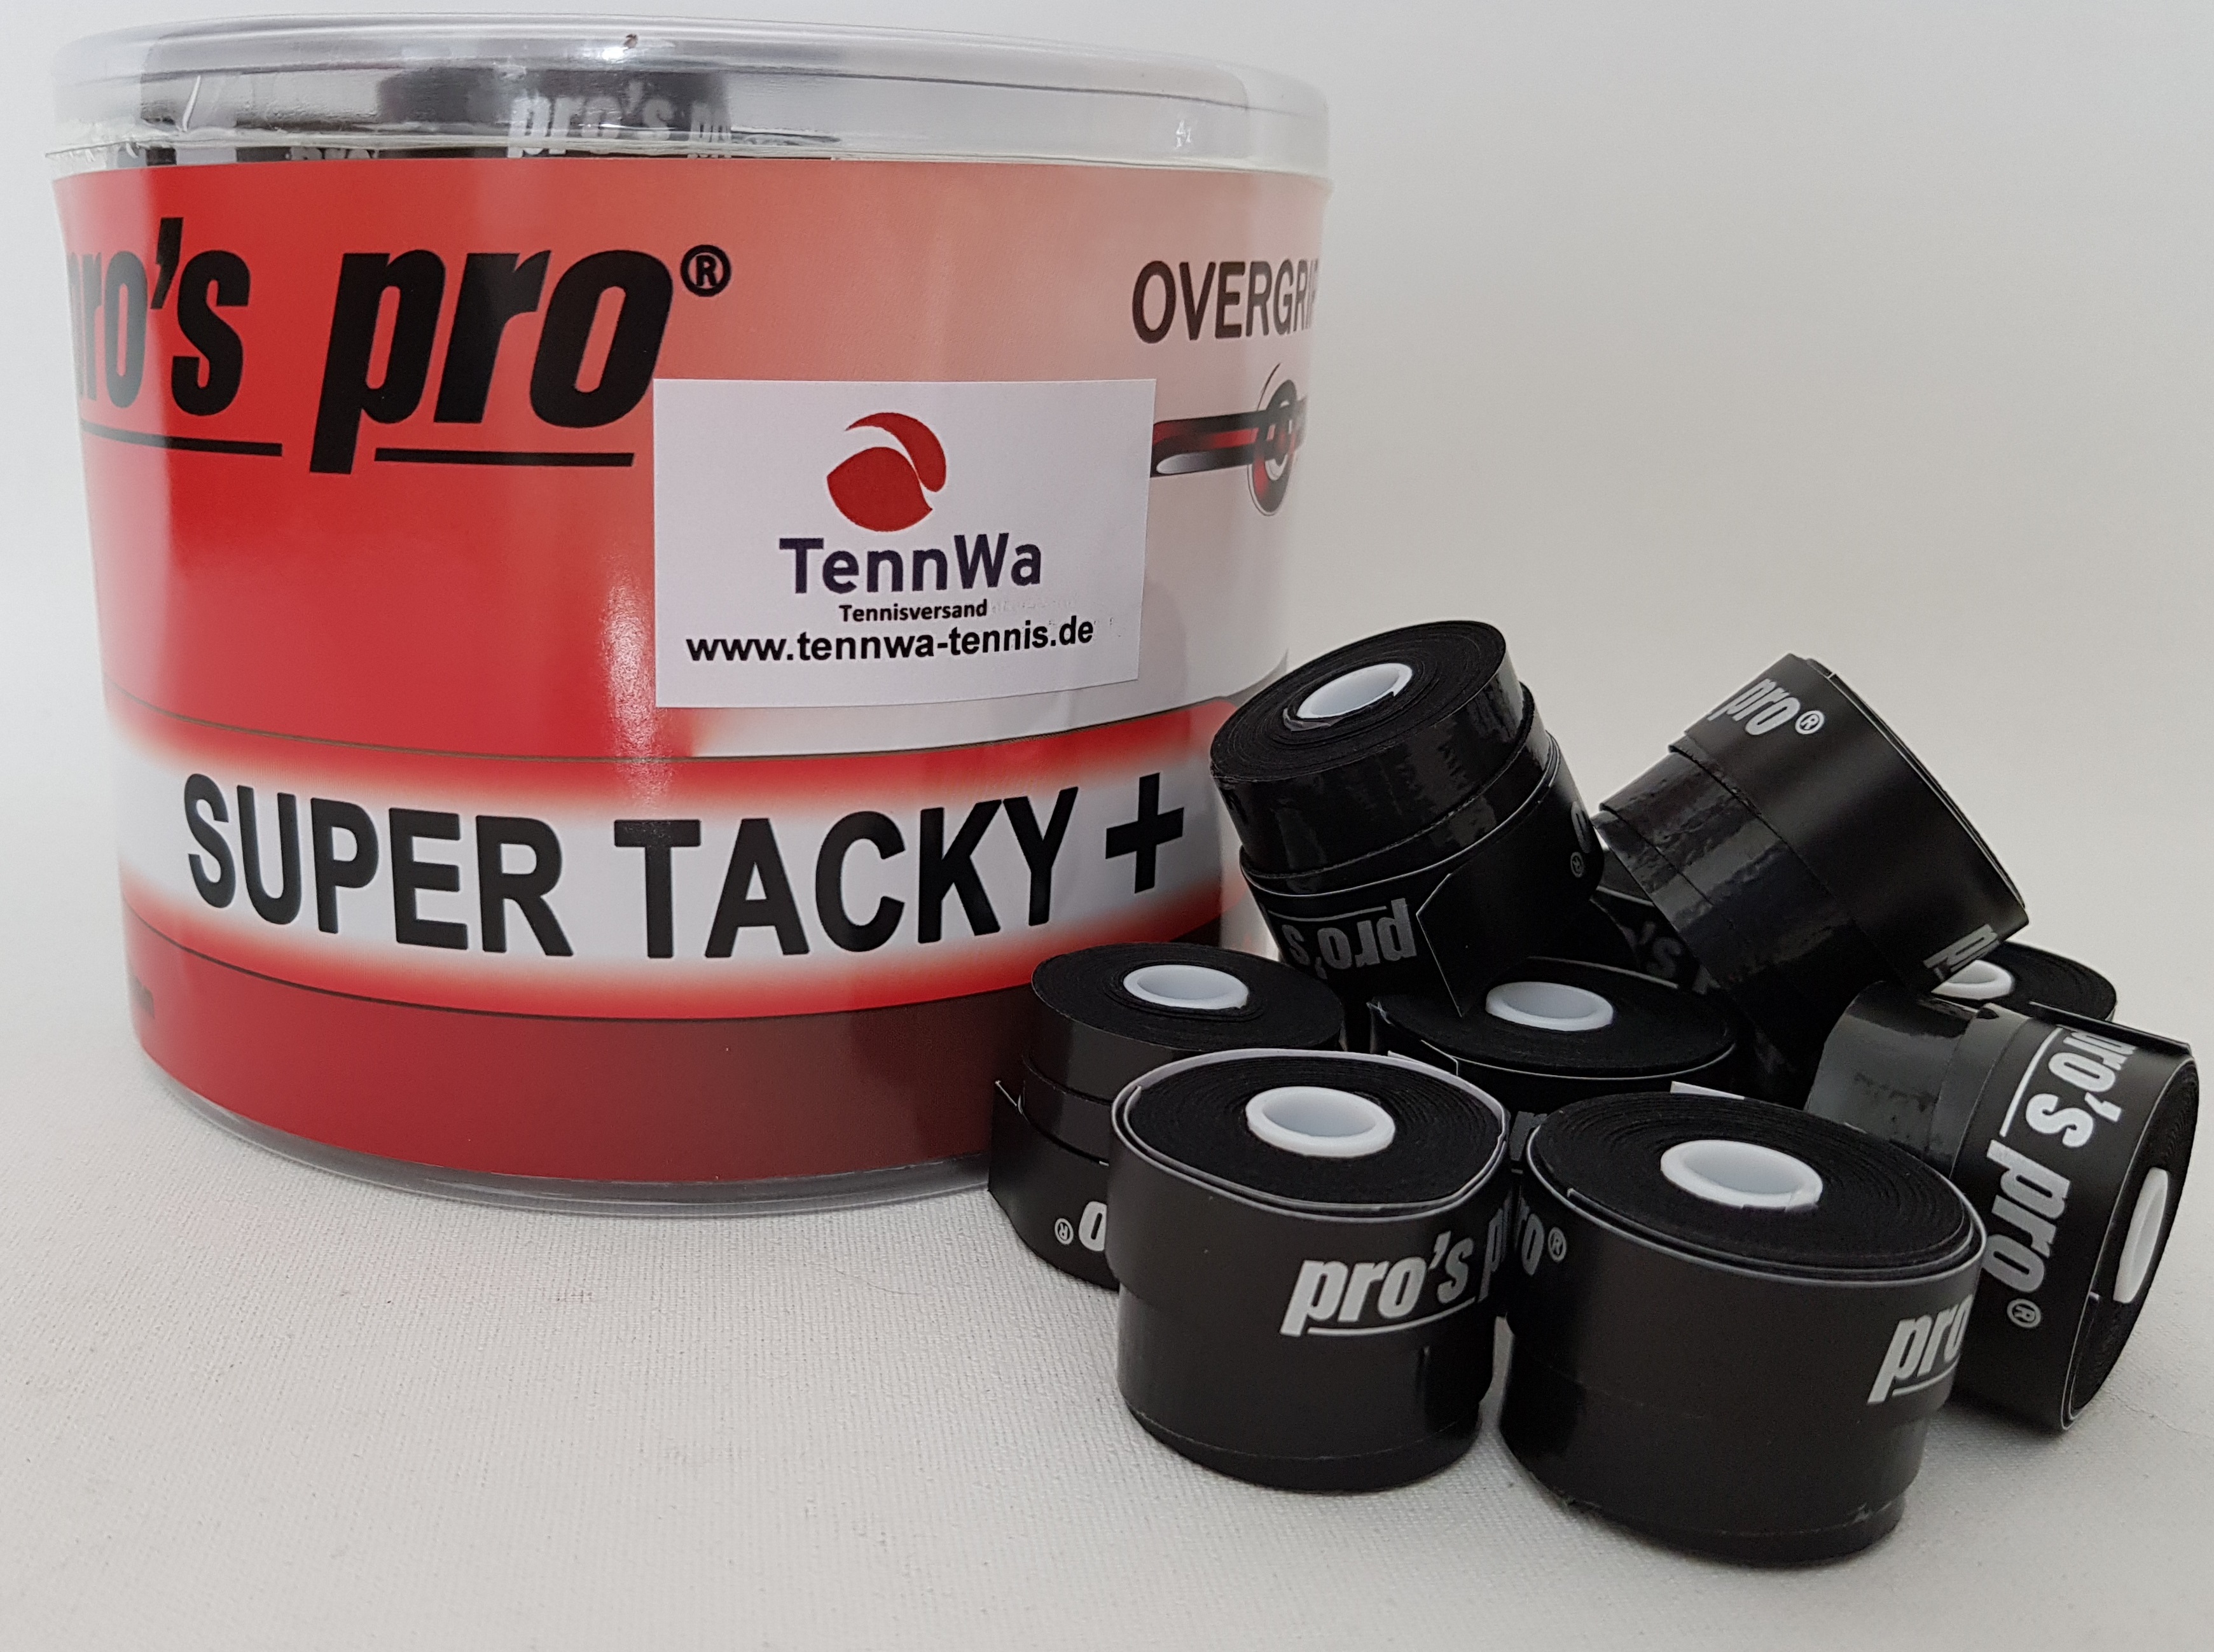 Pros Pro Super Tacky Plus schwarz, 10 Stück